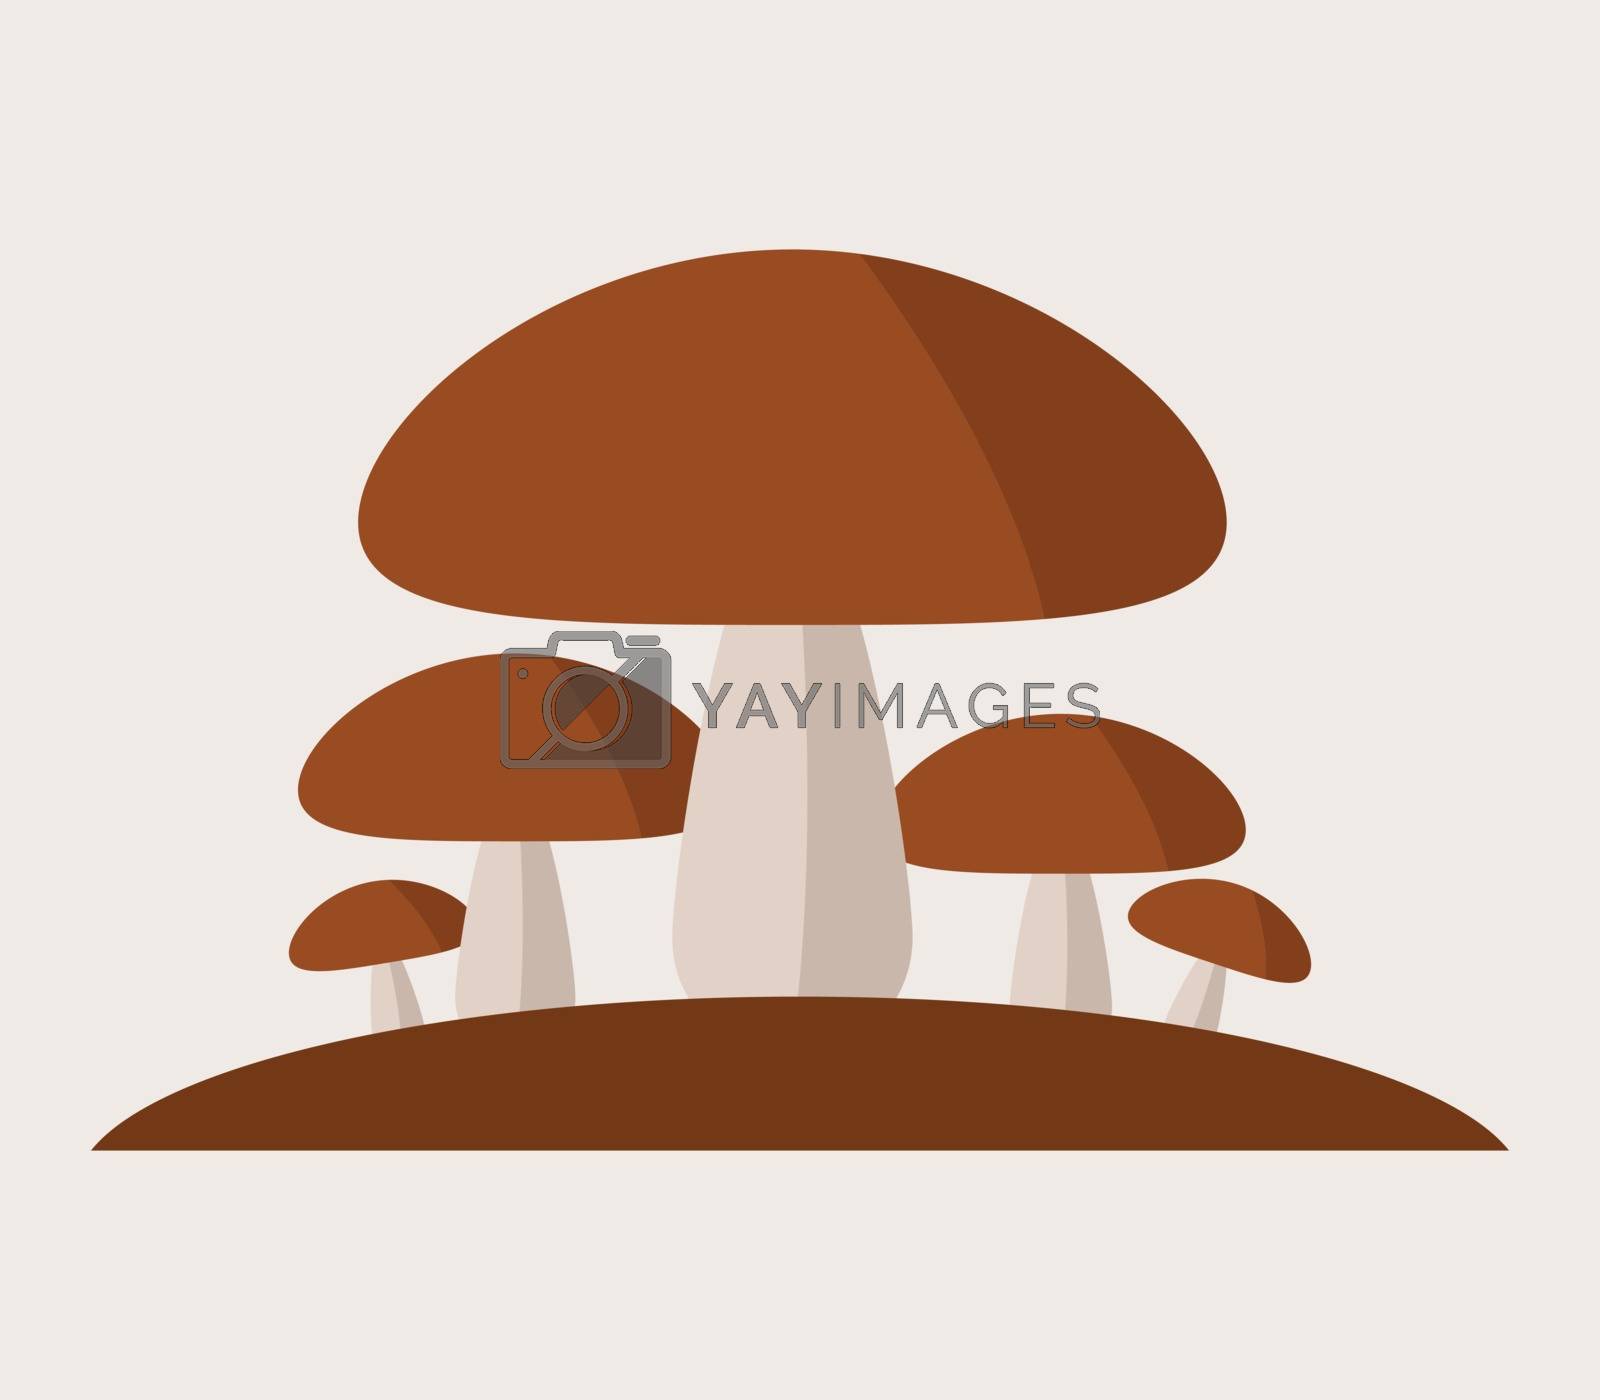 Royalty free image of mushroom icon by Mark1987